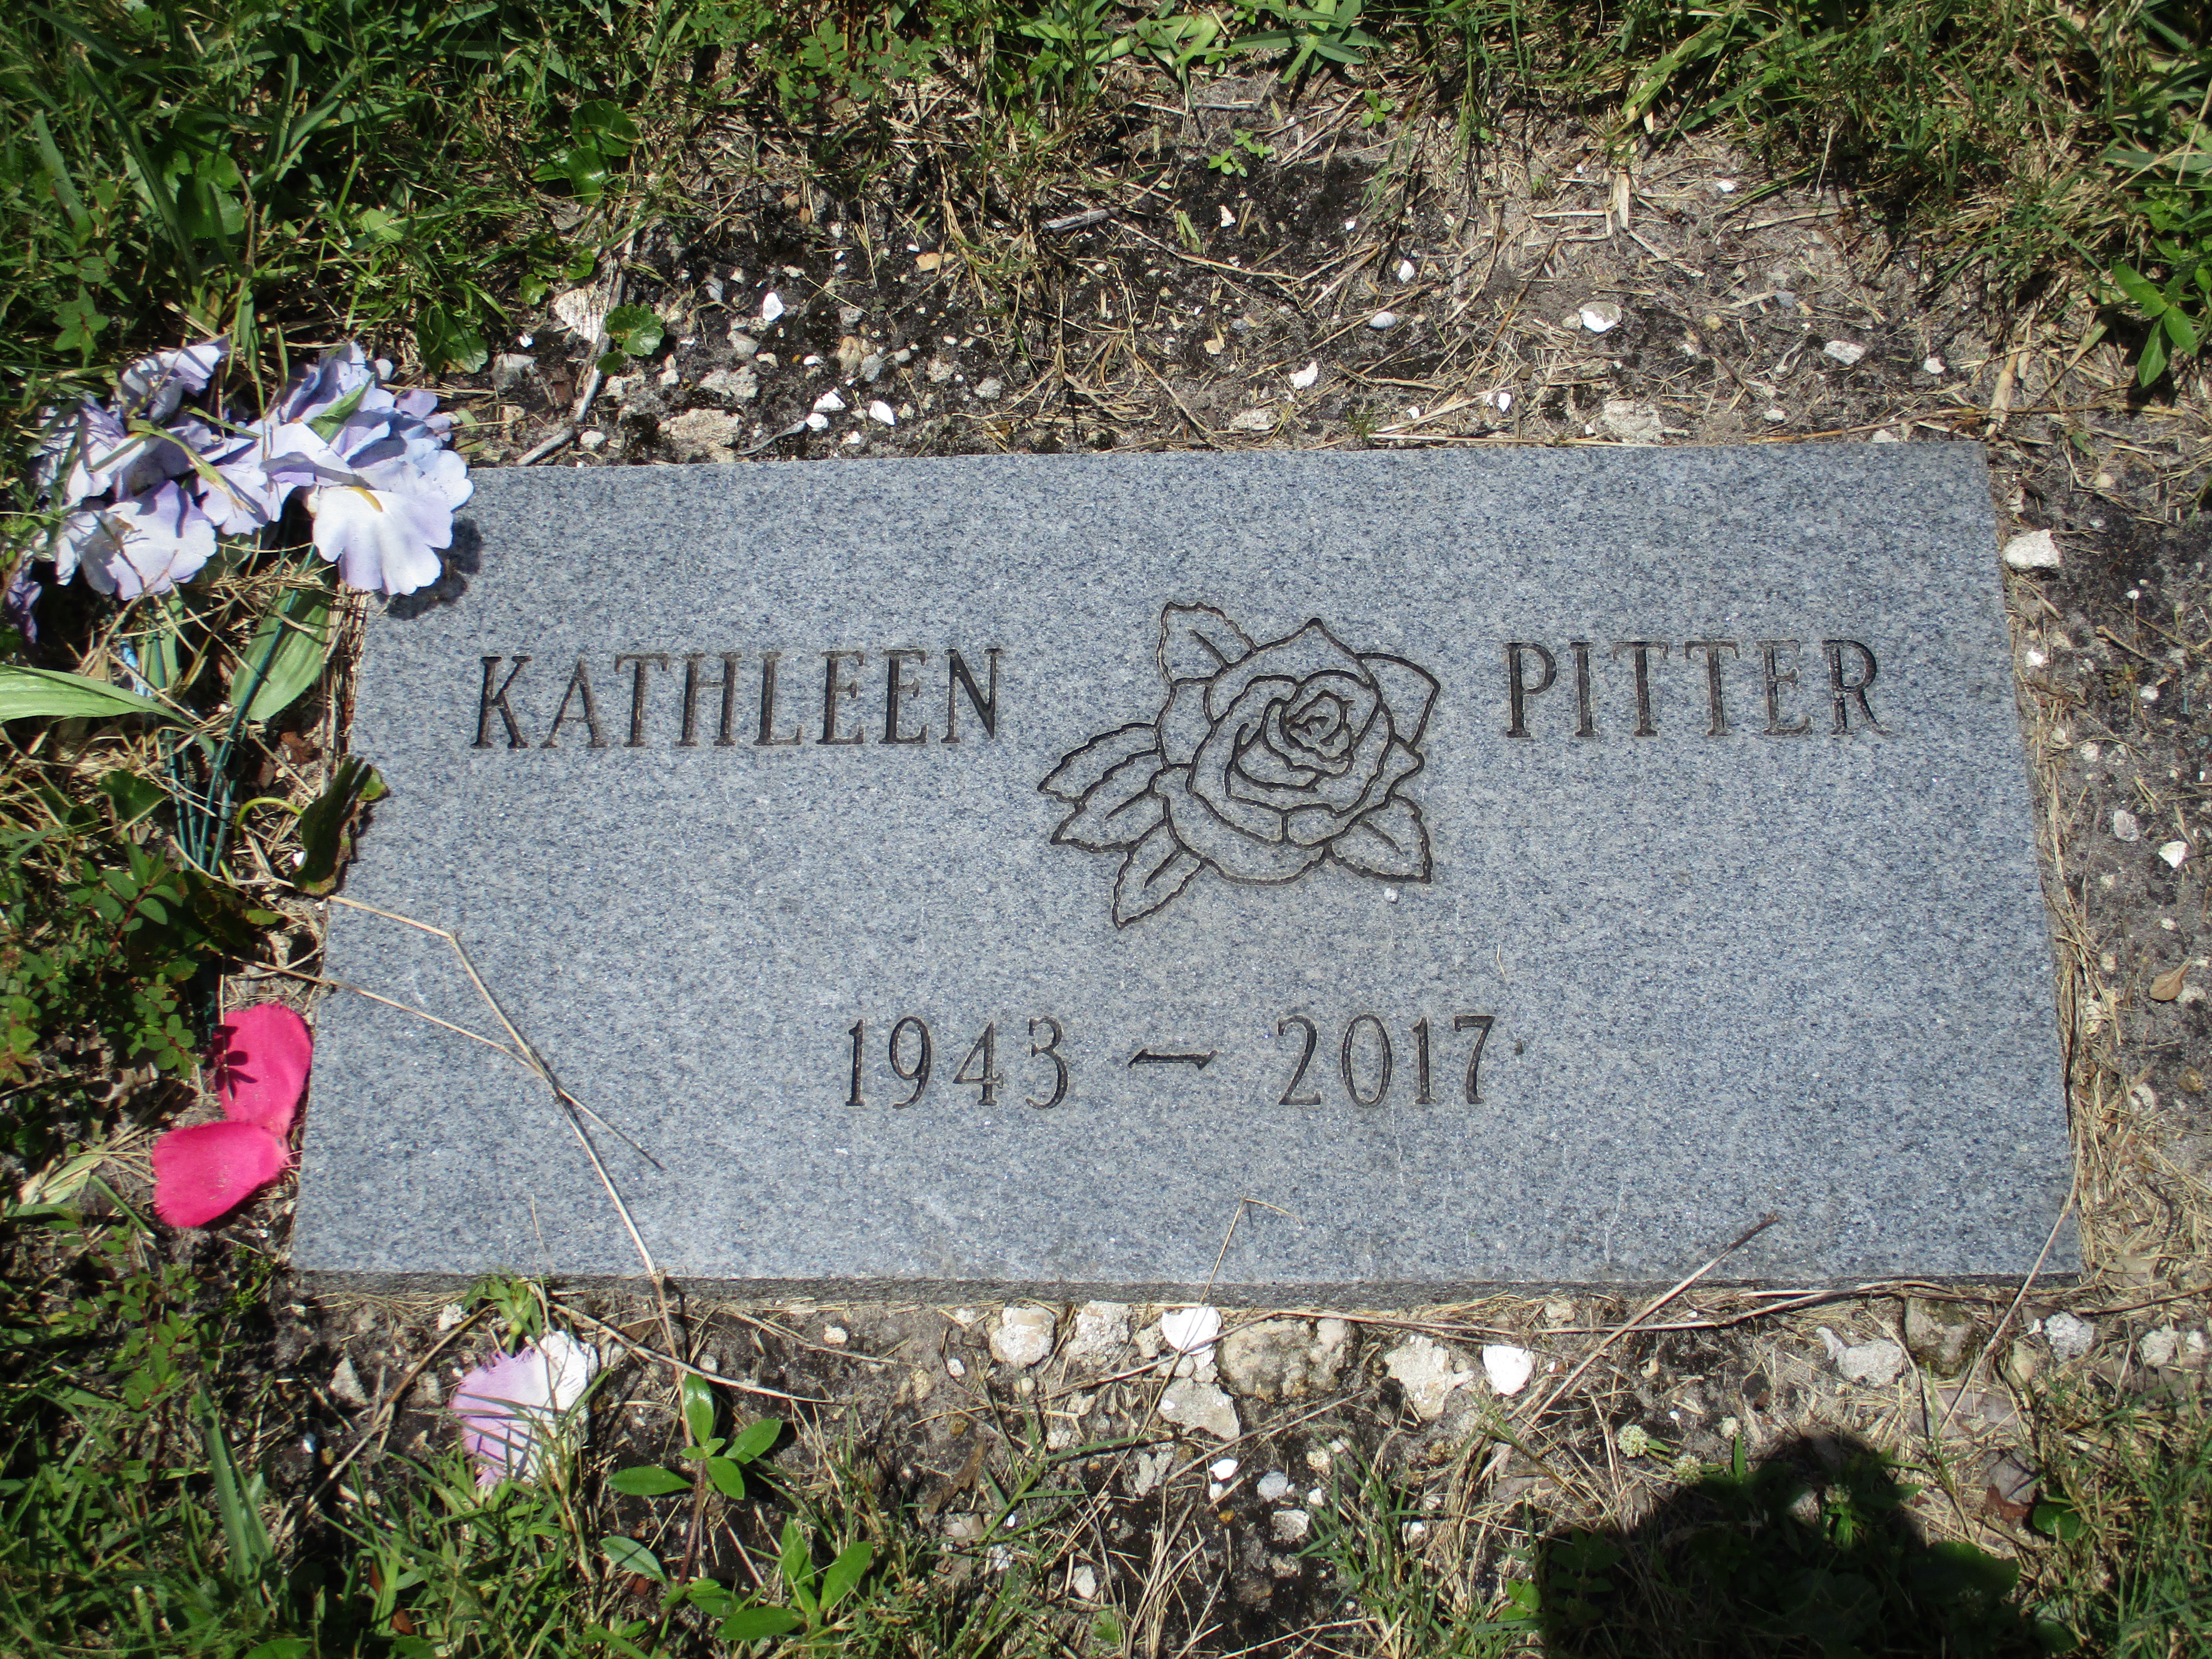 Kathleen Pitter